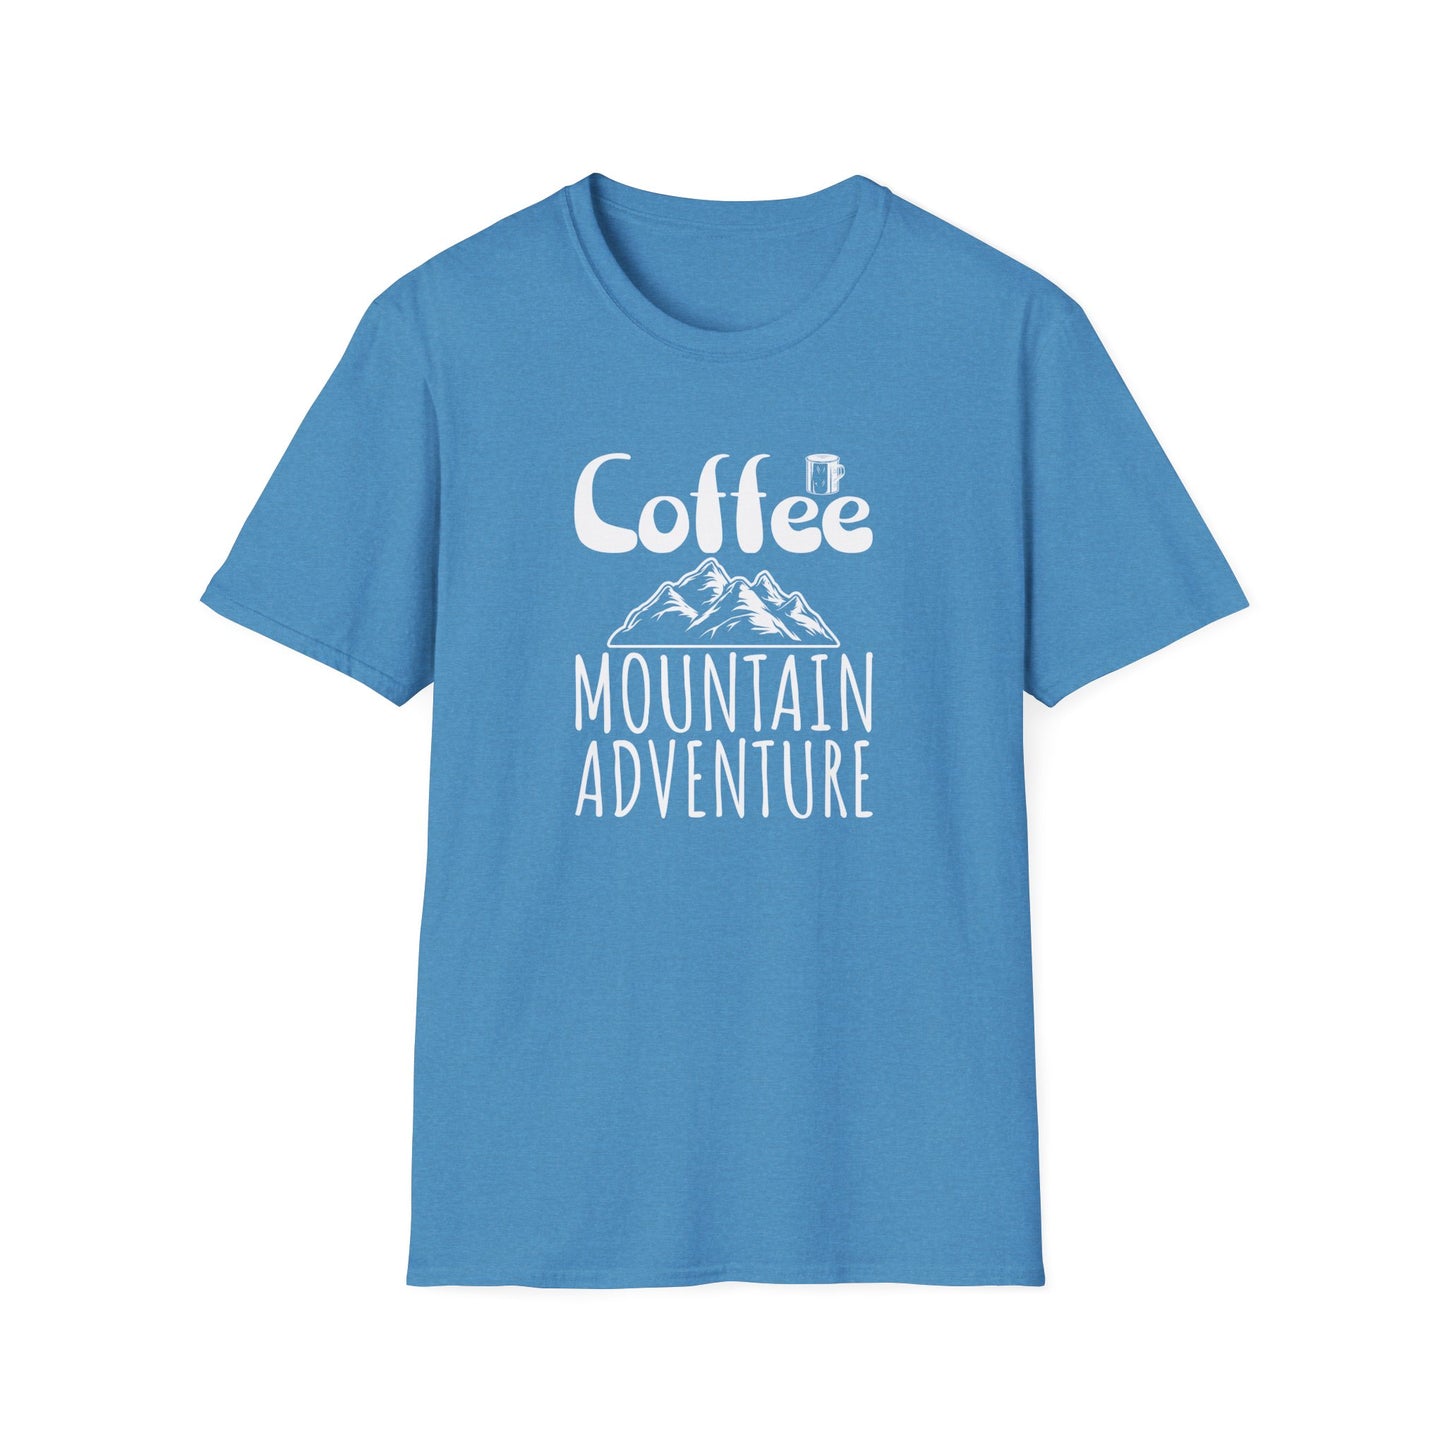 Coffee Mountain Adventure Tee: Explore Your Caffeine Peaks in Style!